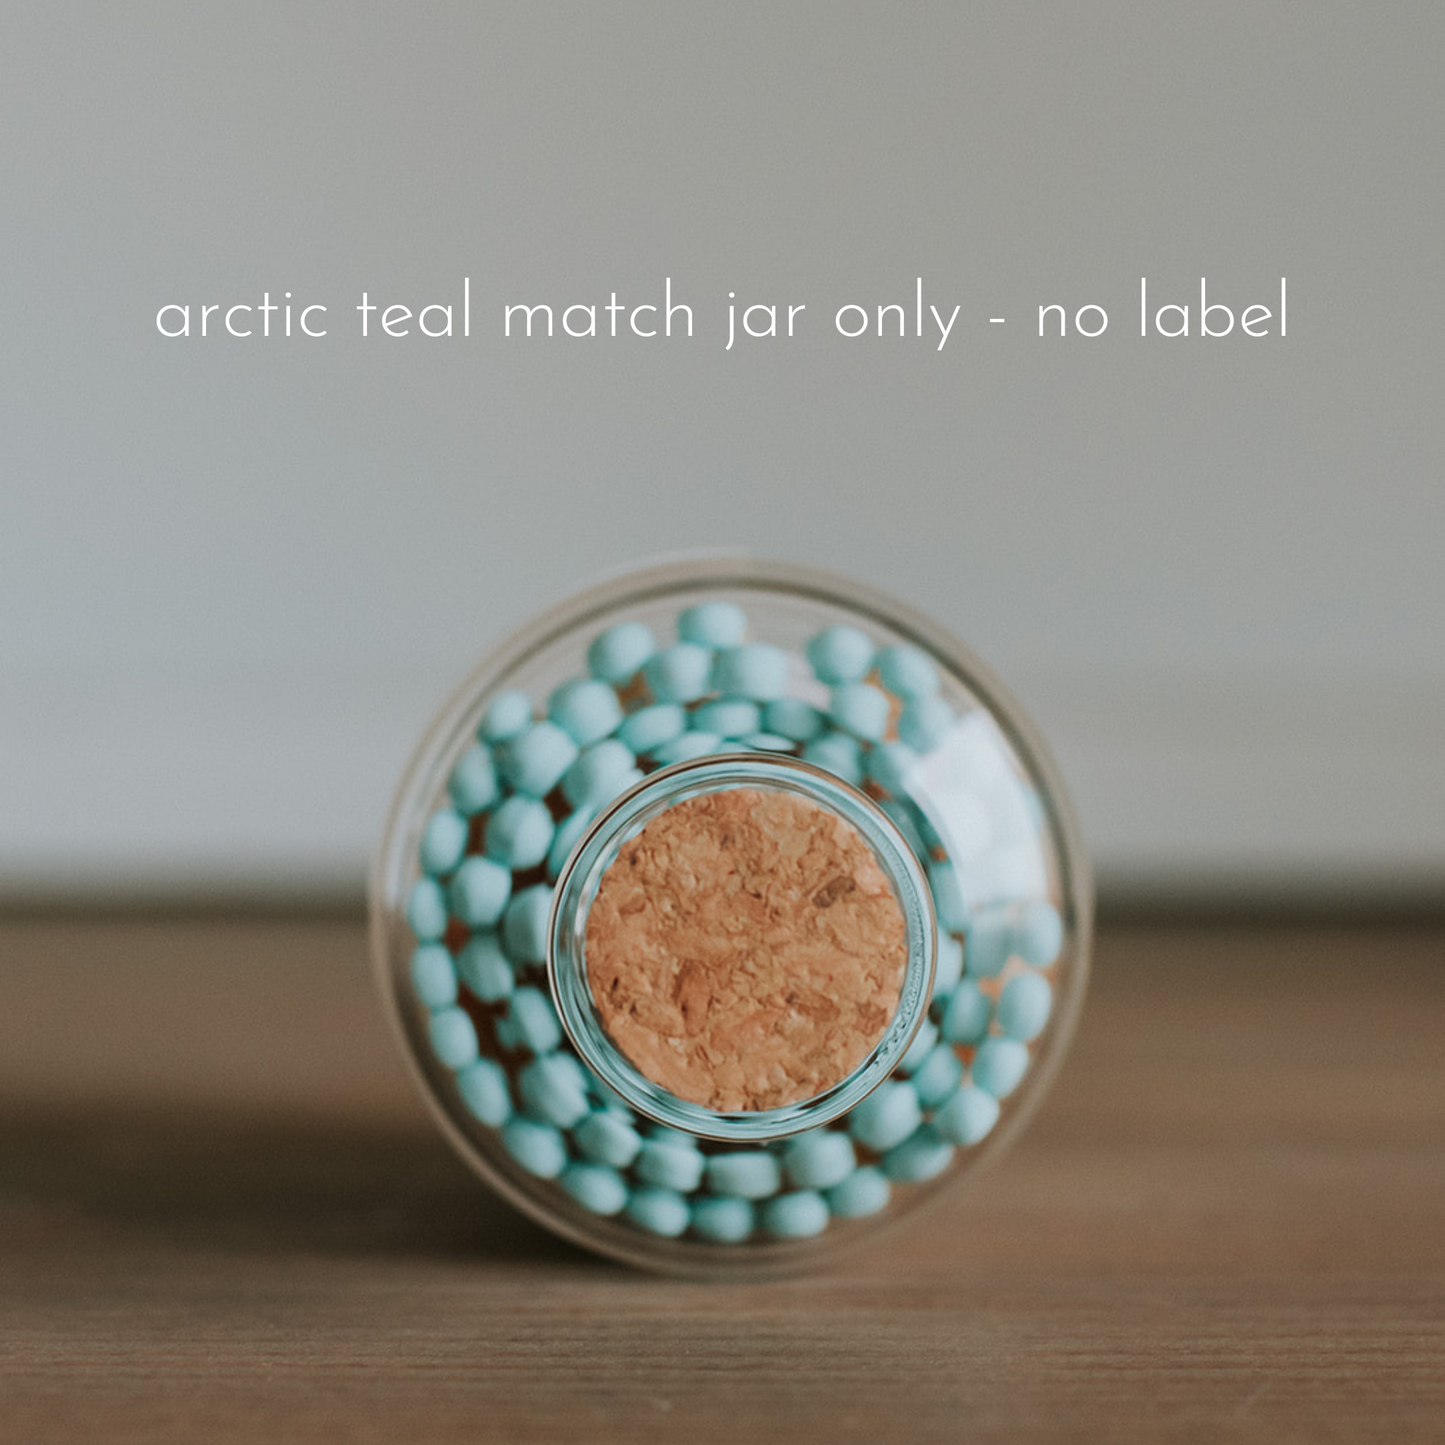 Jar Only - No Label